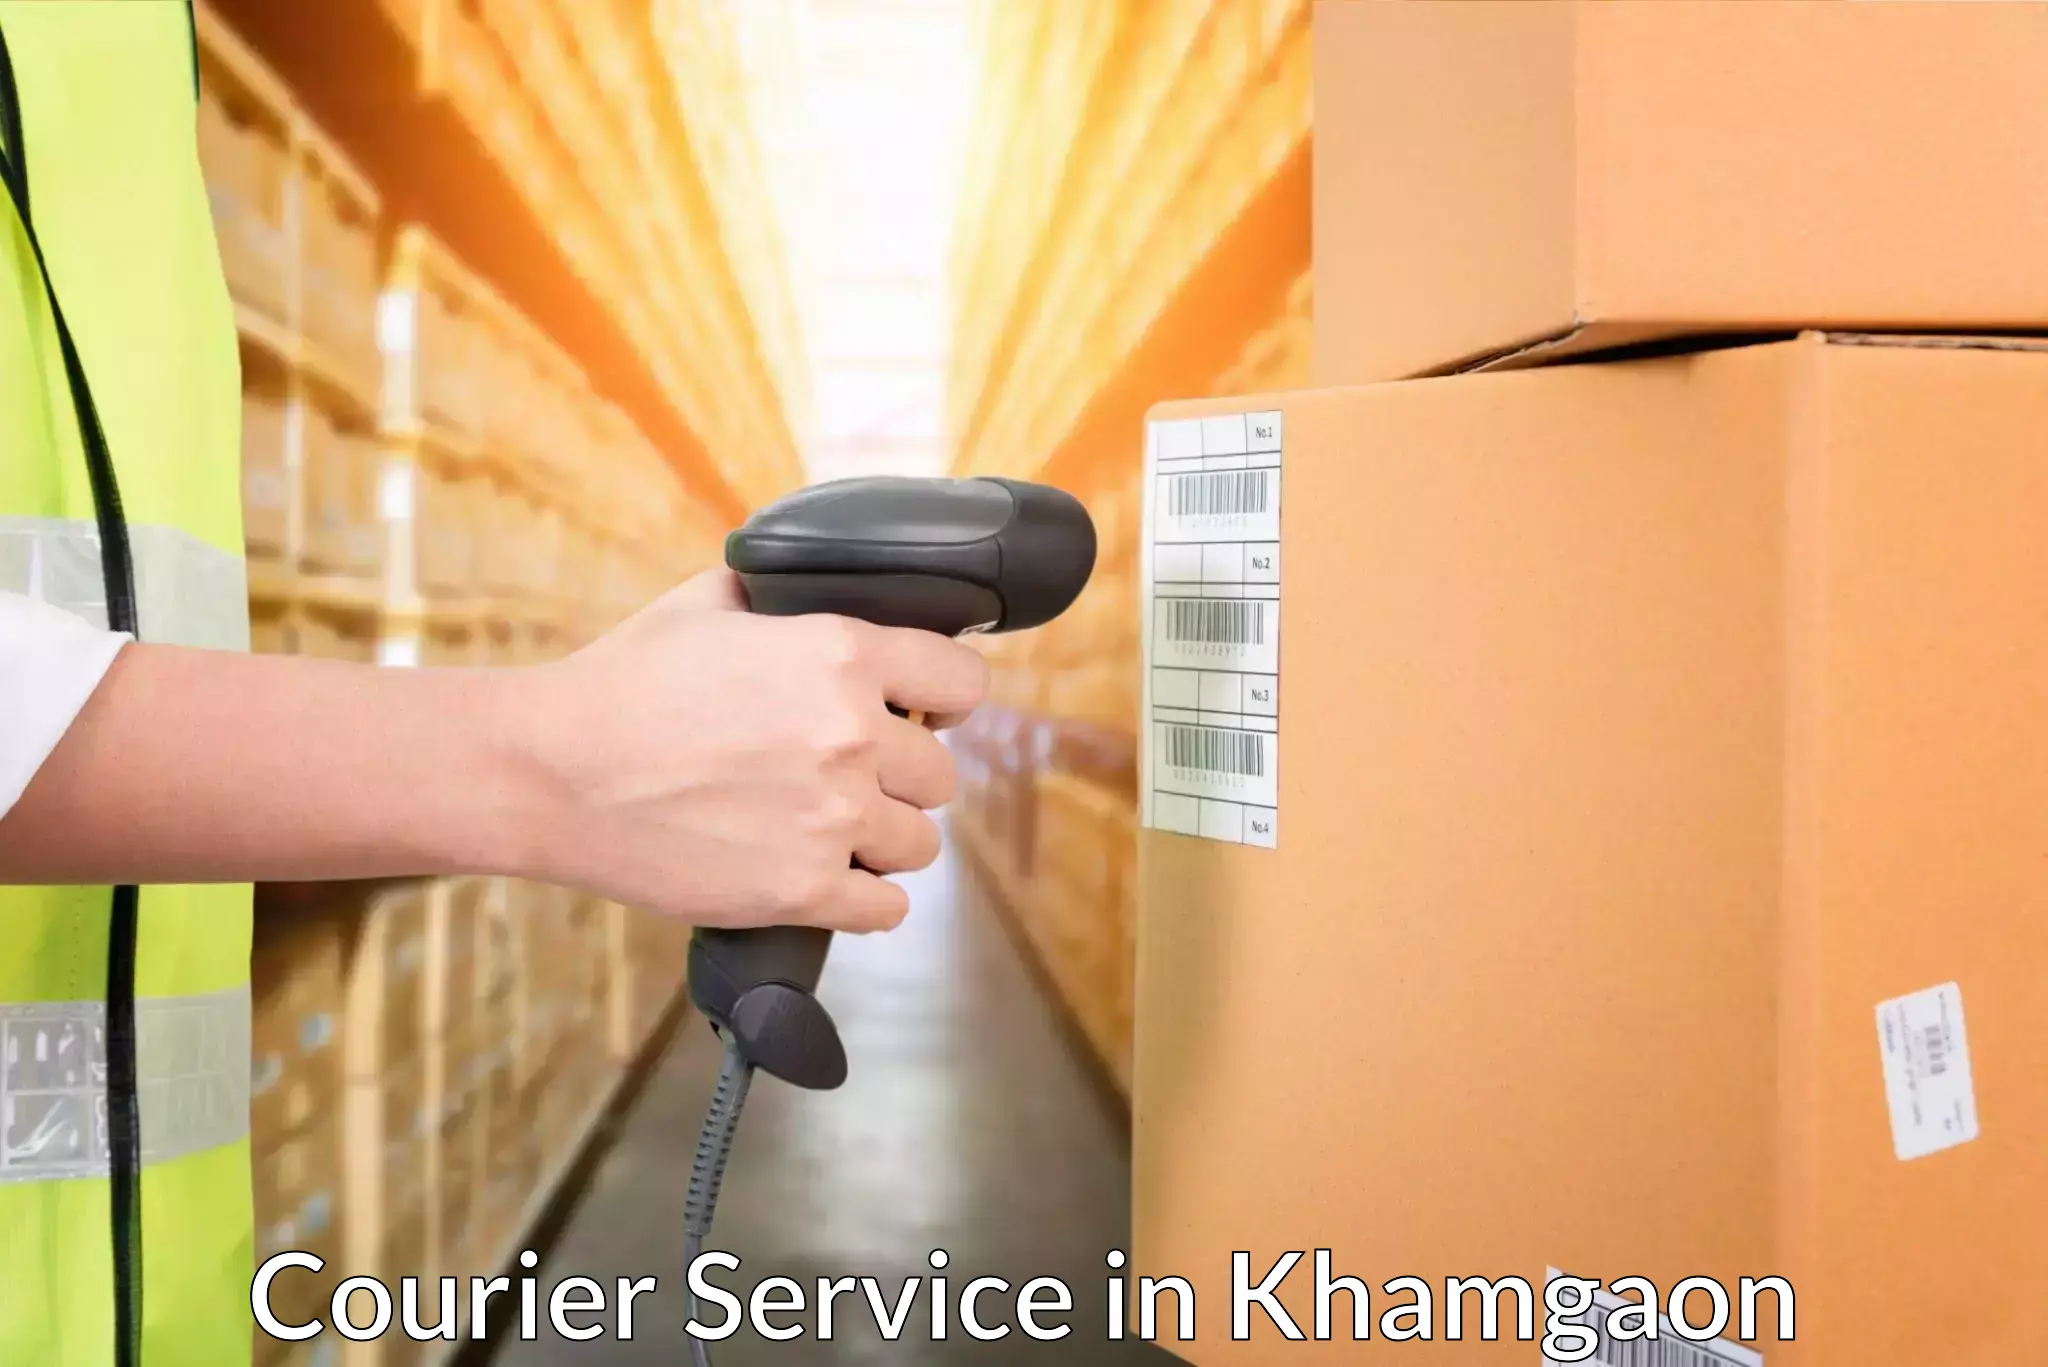 Bulk shipping discounts in Khamgaon